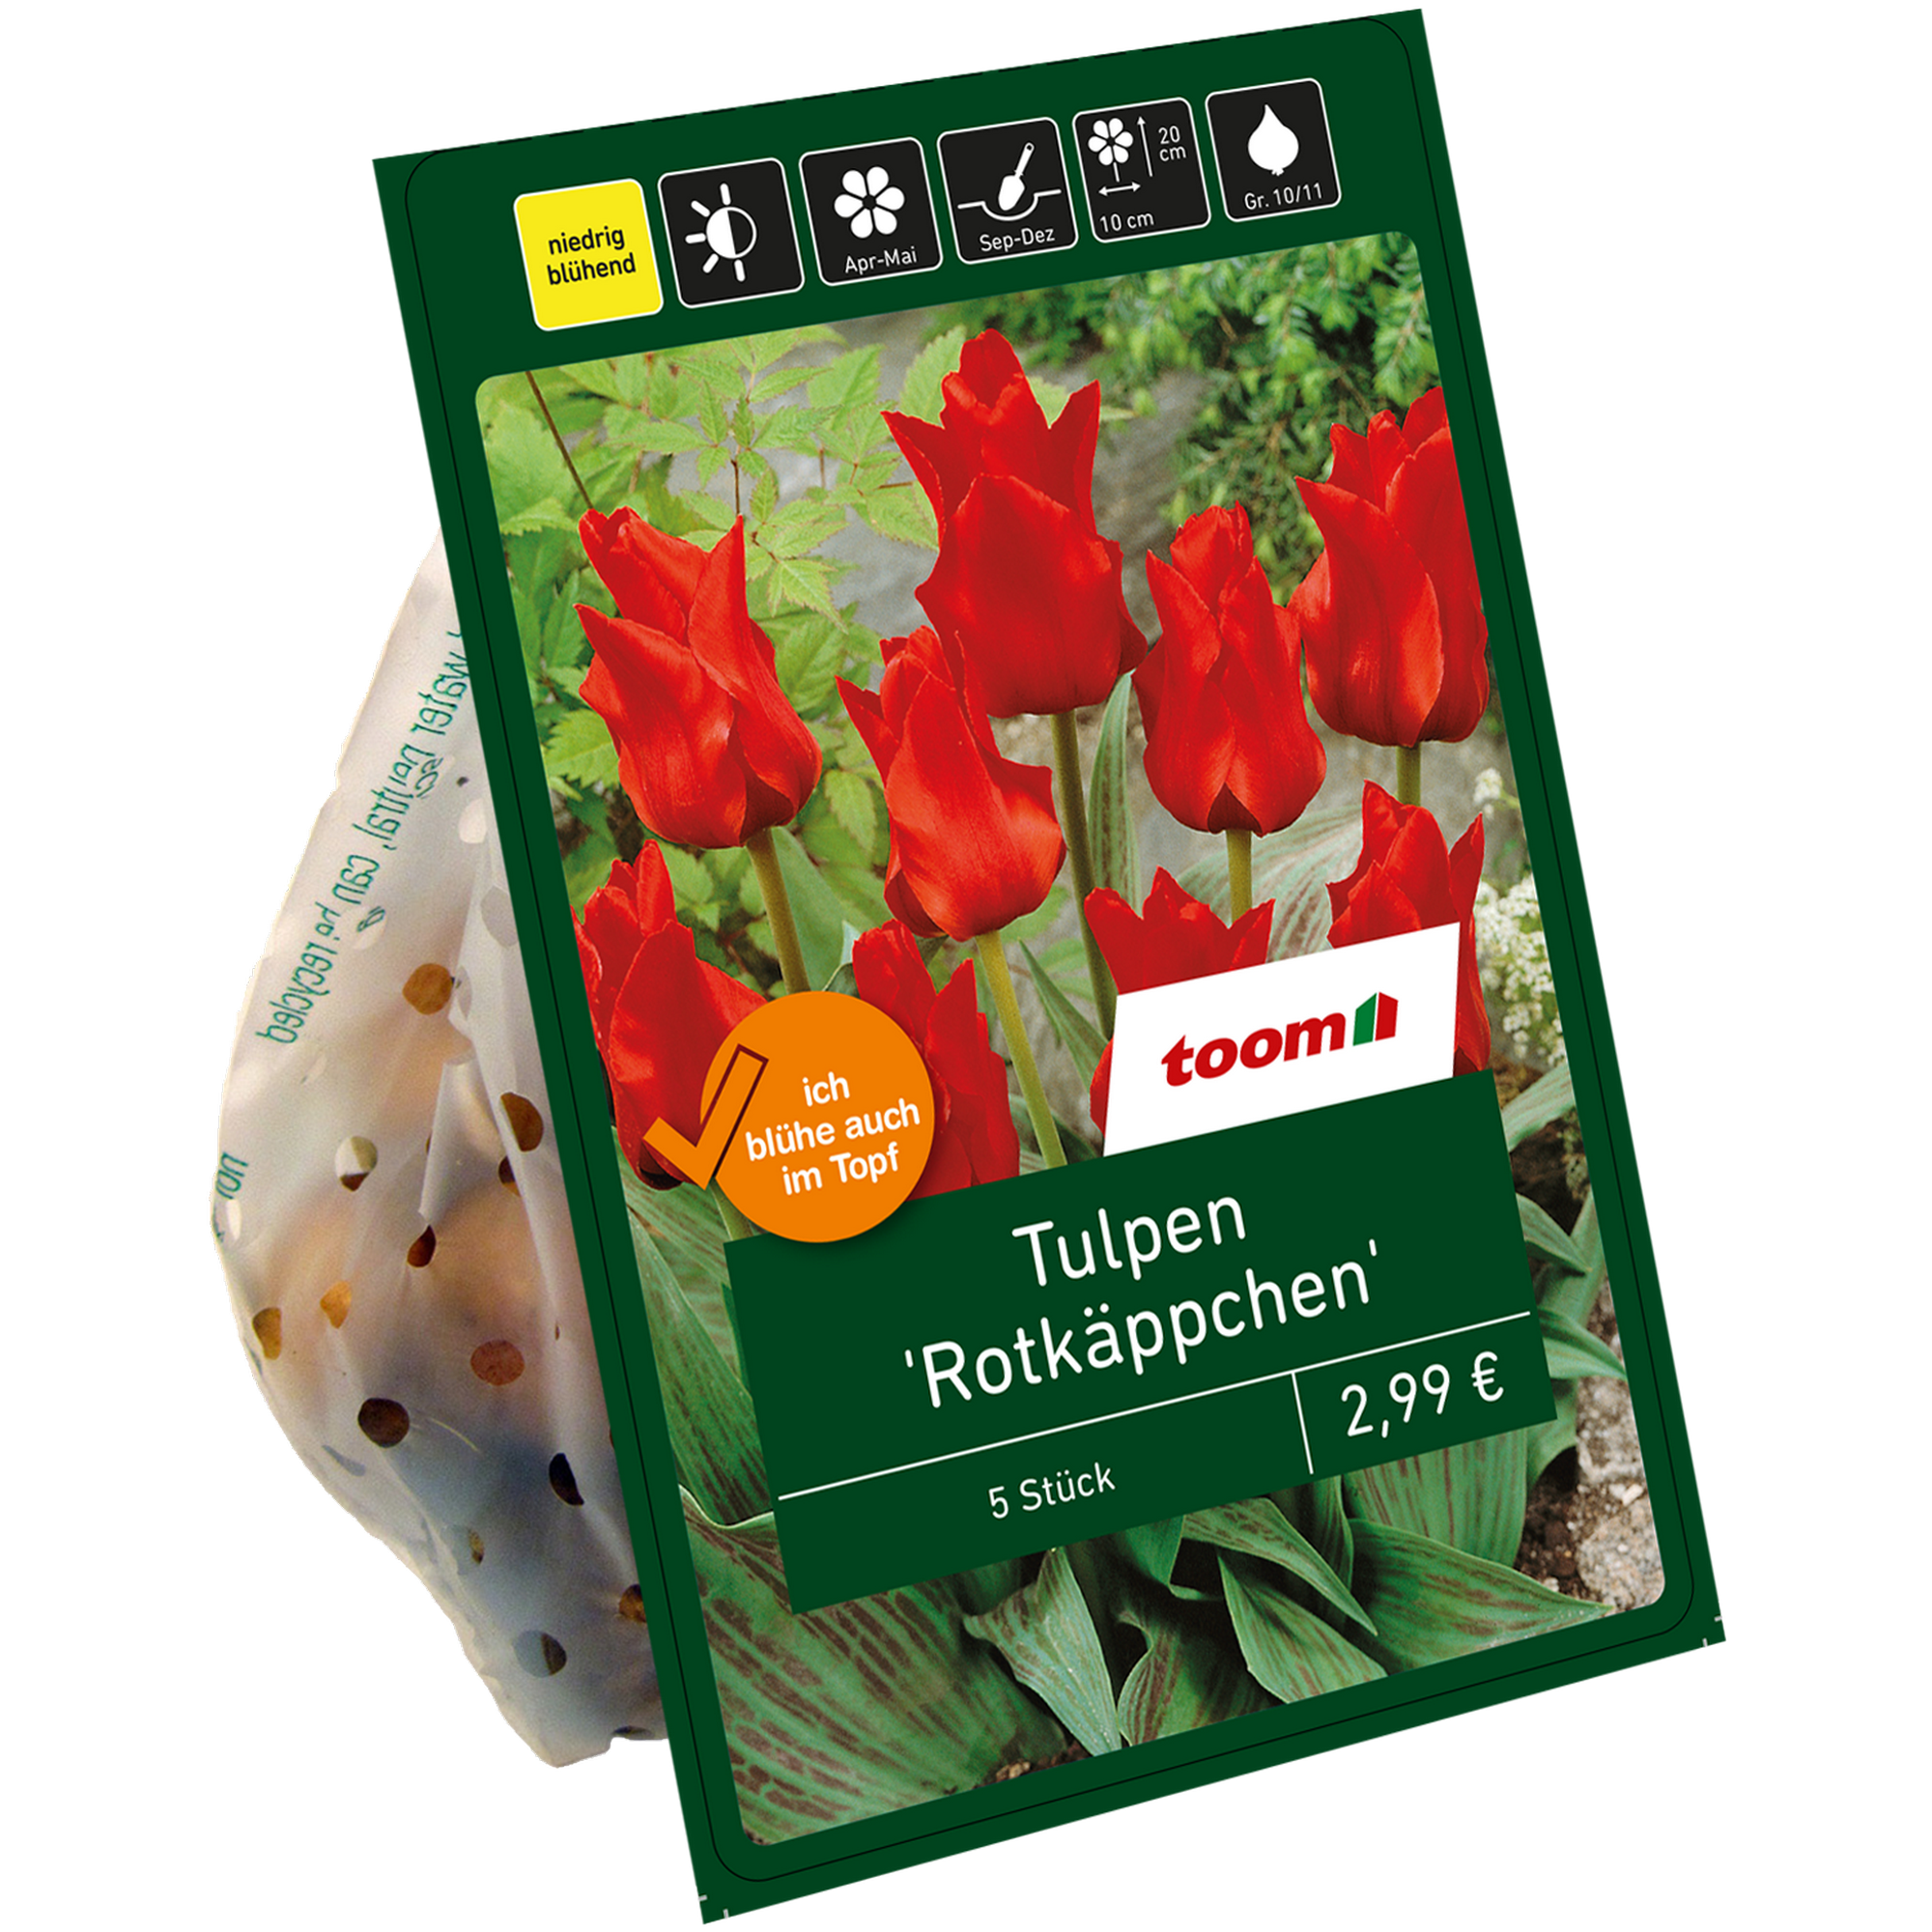 Tulpen 'Rotkäppchen' rot 6 Zwiebeln + product picture